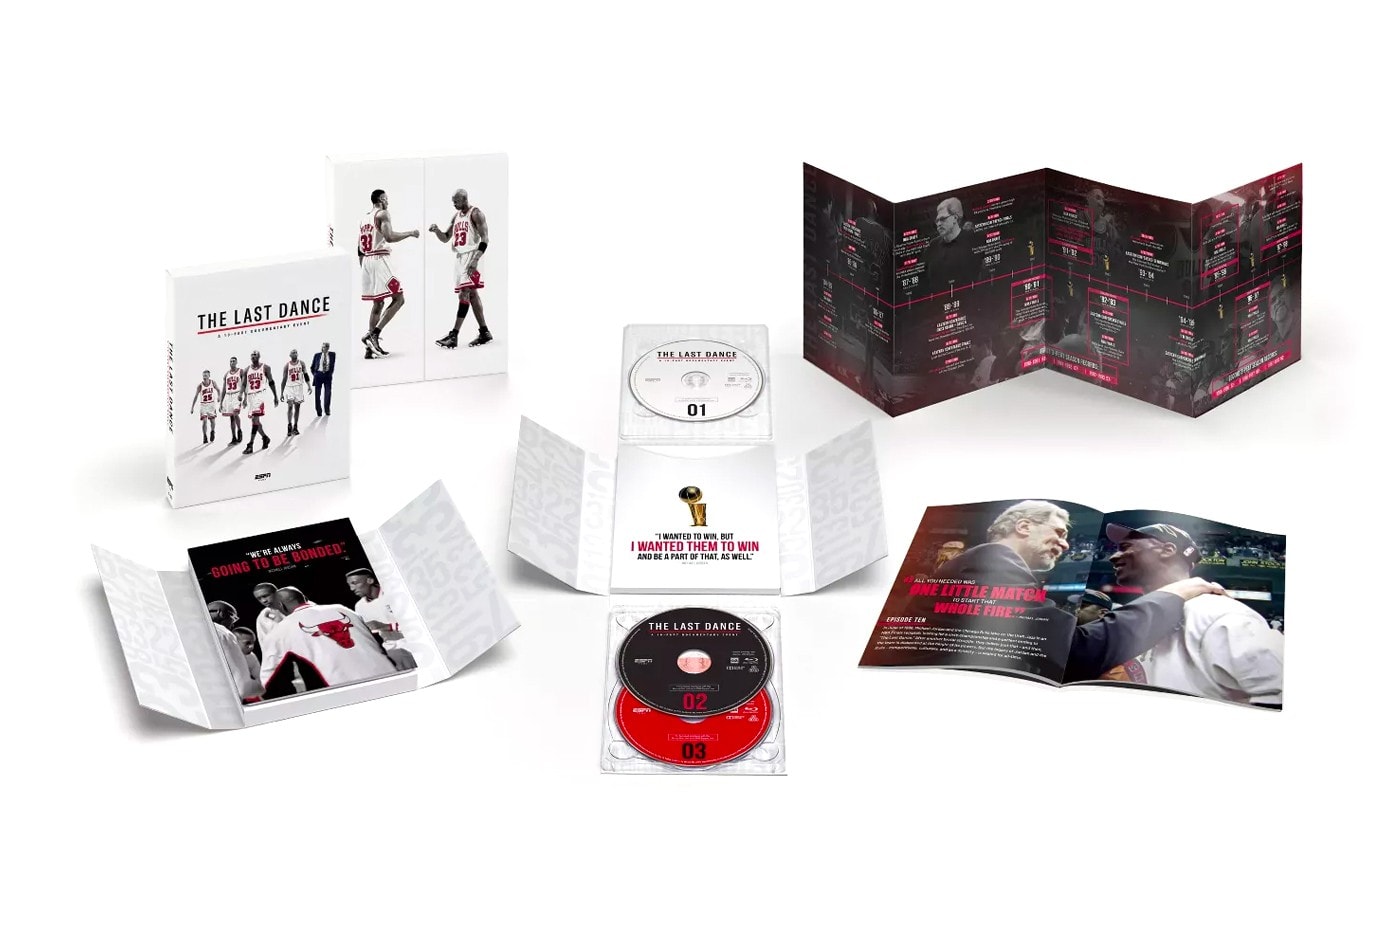 Michael Jordan 人氣紀錄片《The Last Dance》限量藍光套組現正開放預購